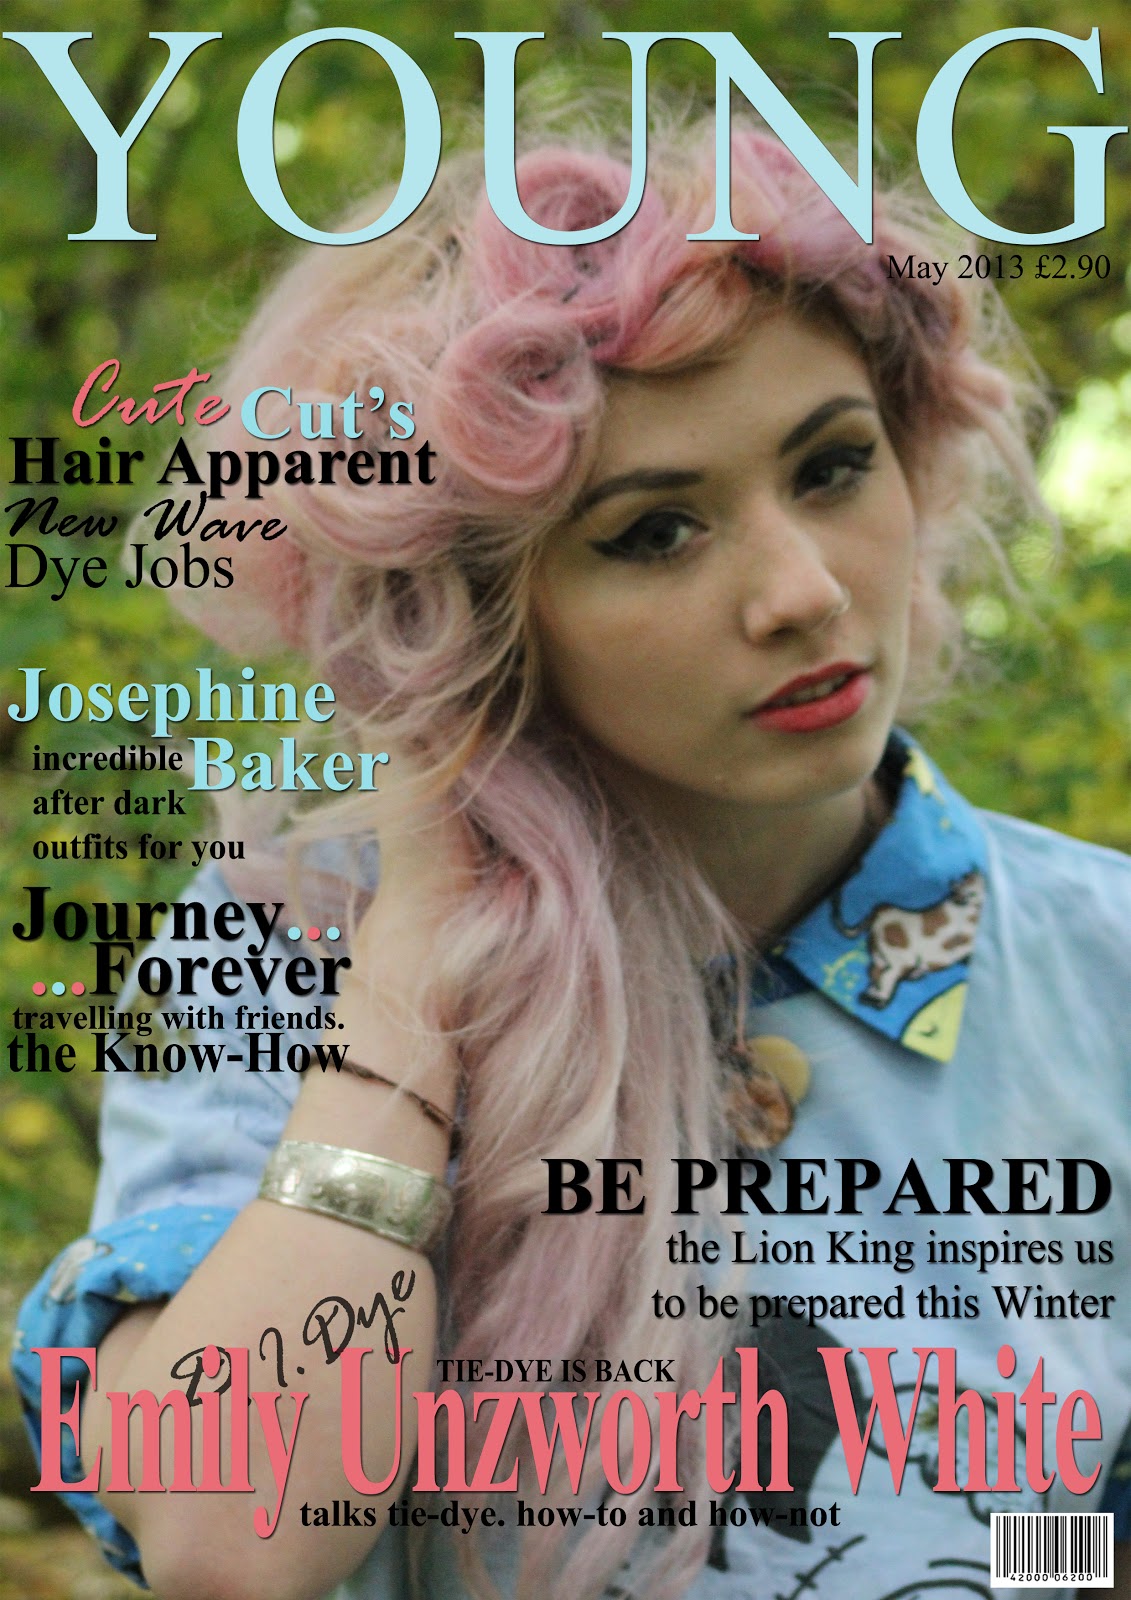 Magazine cover essay